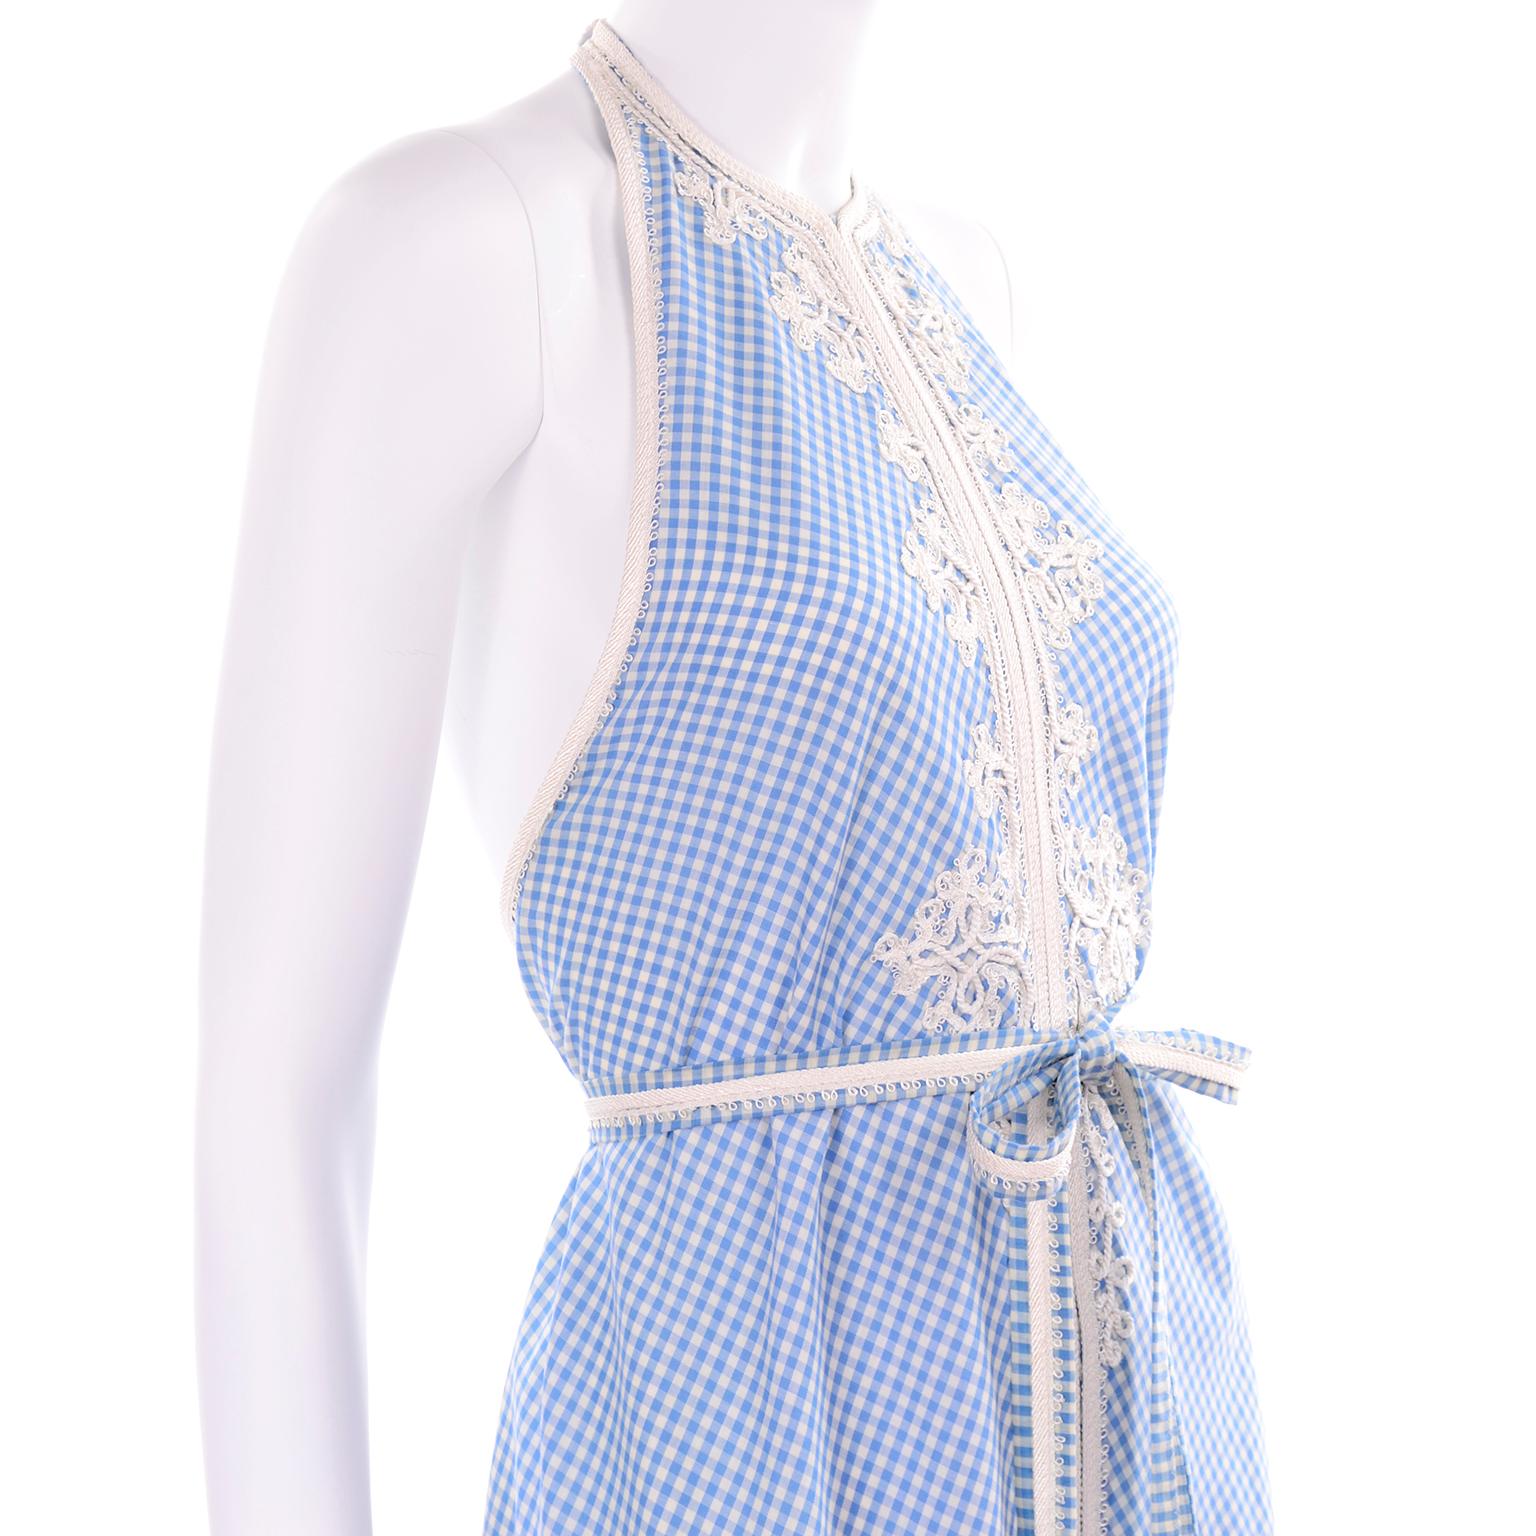 1970s Anne Klein Vintage Halter Dress in Blue and White Gingham Check w applique 4